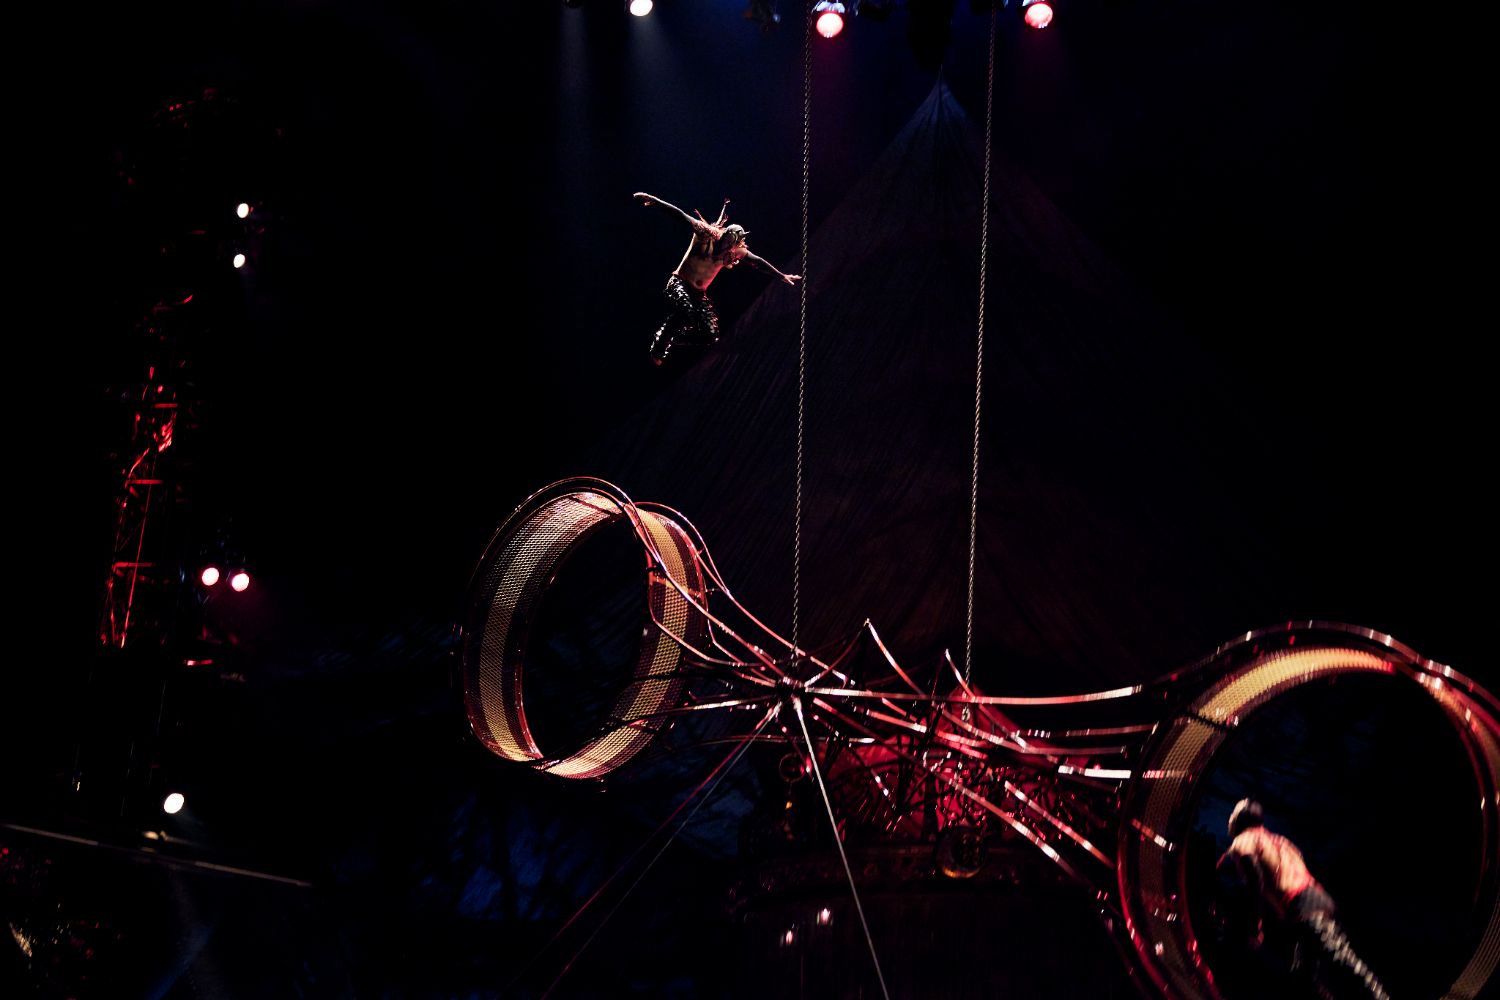 PHOTO: Matt Beard | The South Pasadenan | The Wheel of Death in Cirque du Soleil's KOOZA